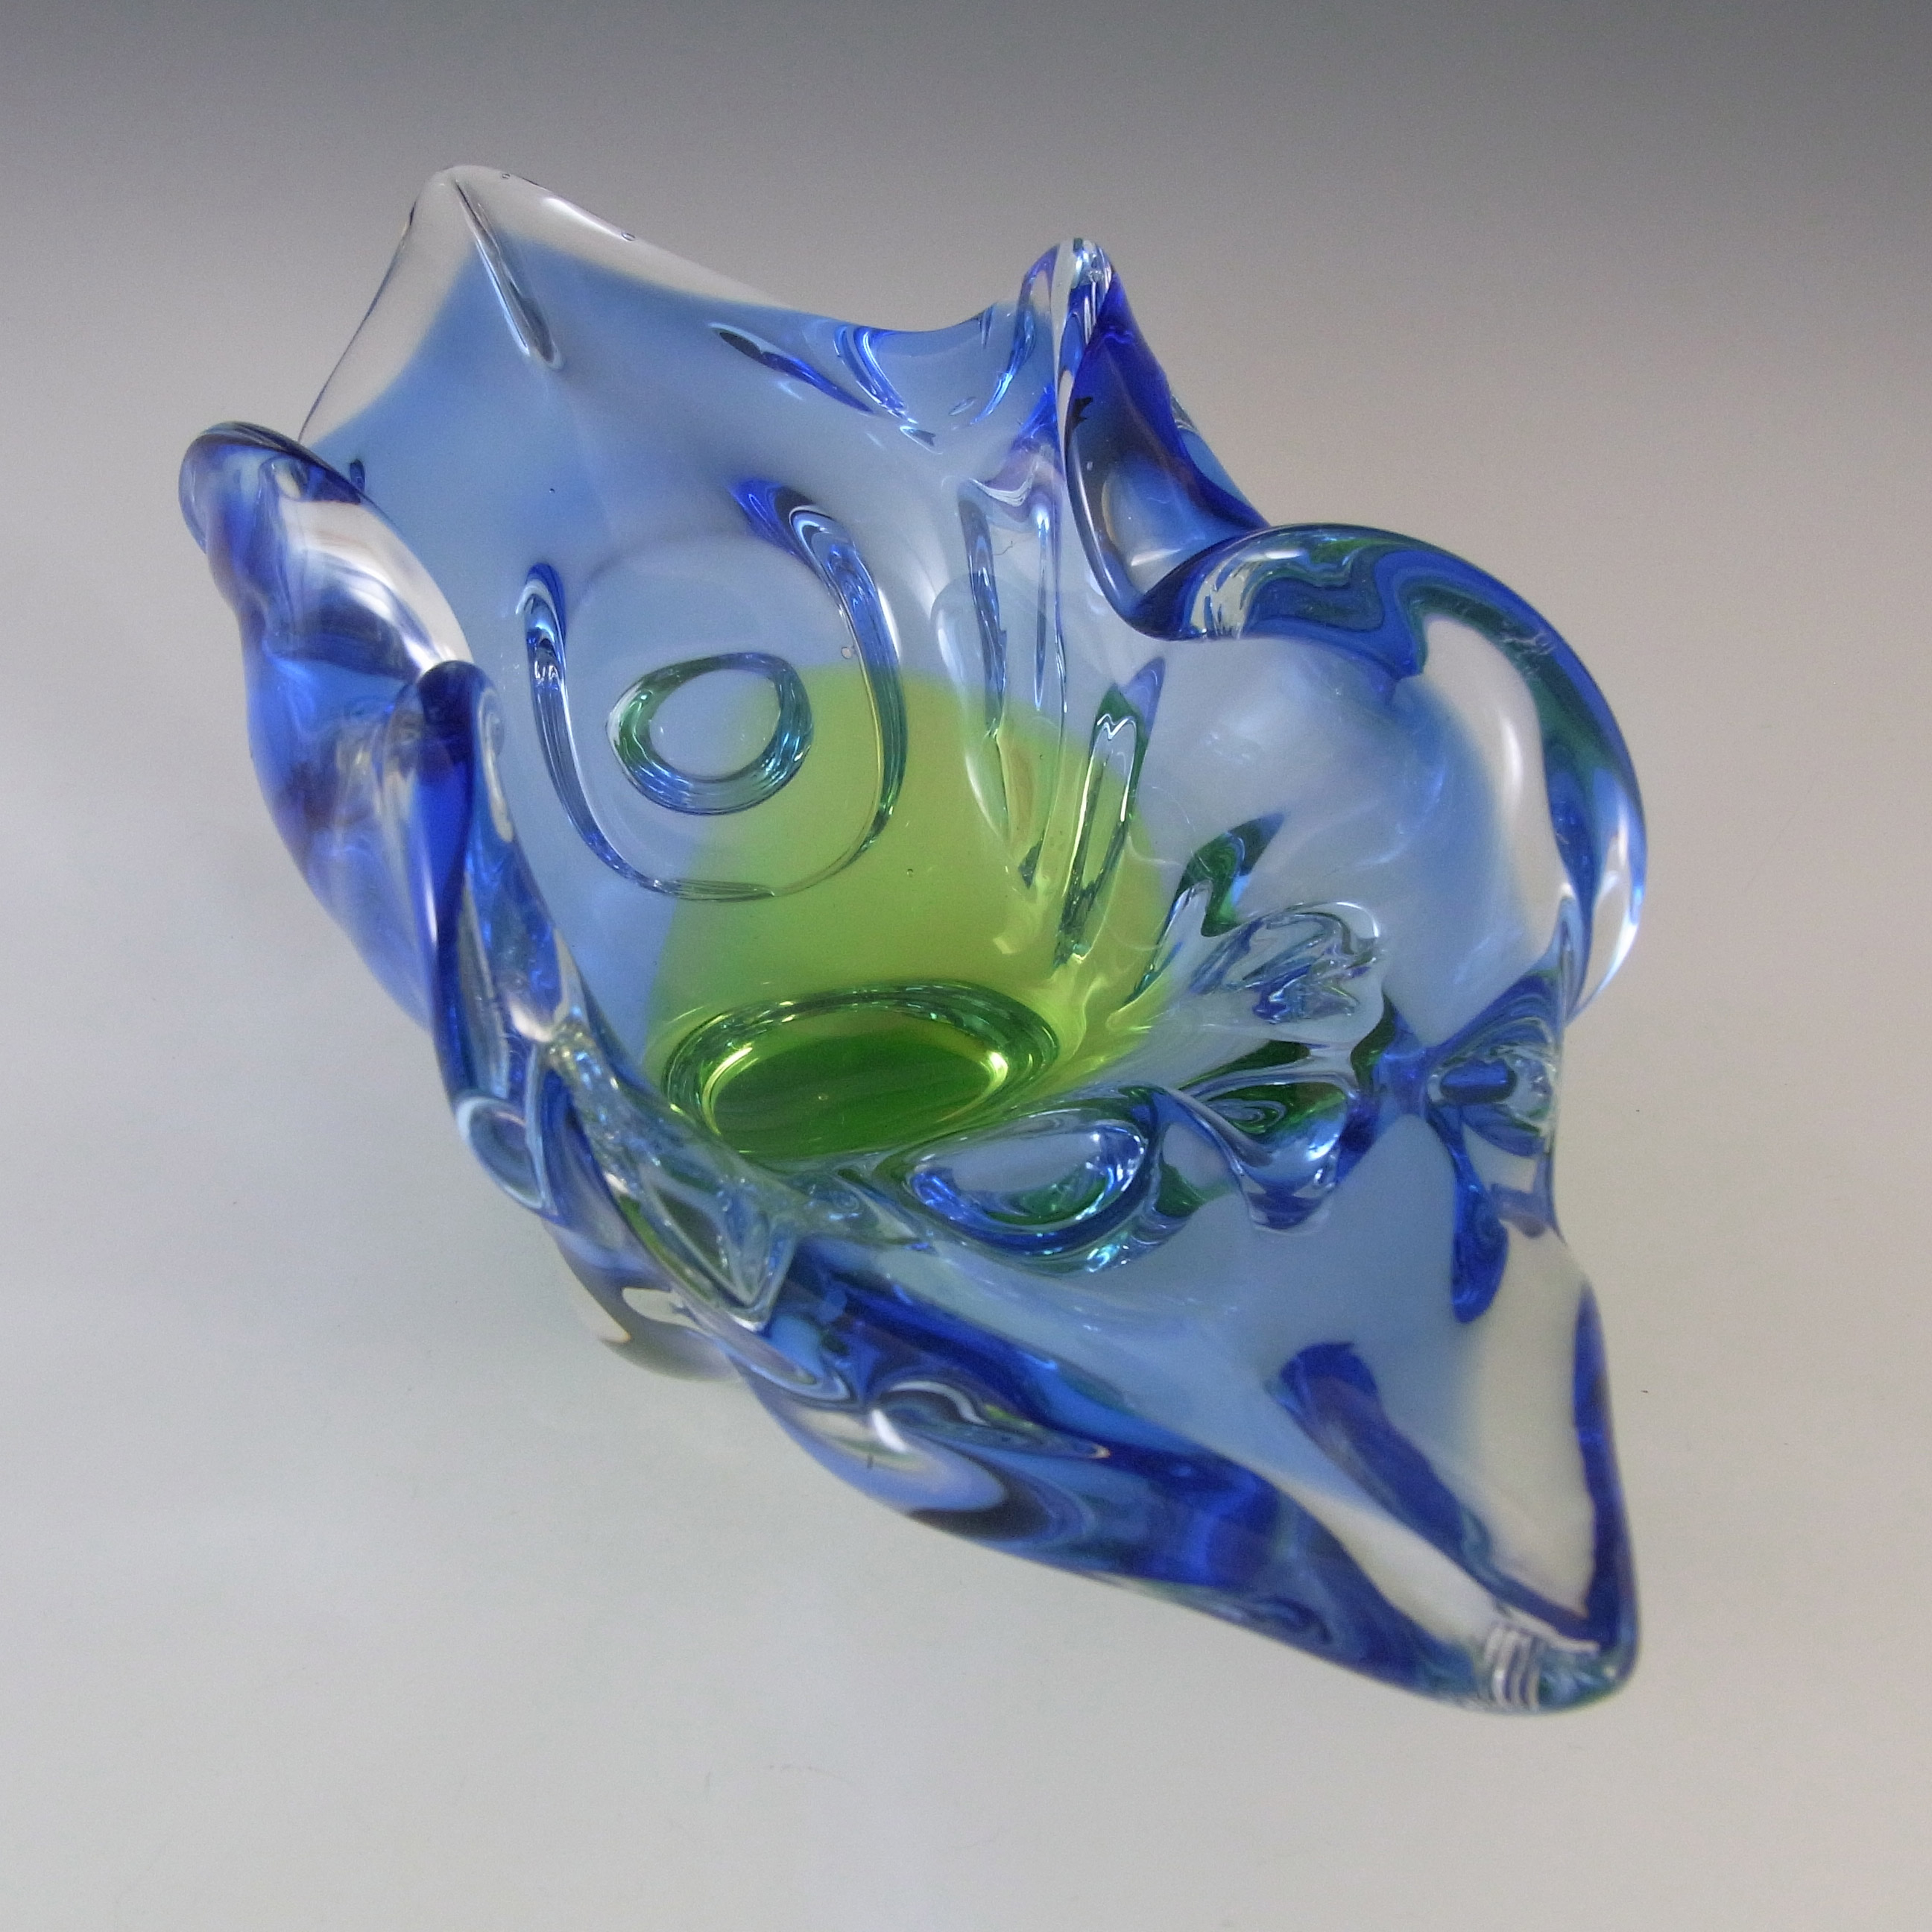 Chřibská Mid Century Czech Blue & Green Glass Bowl - Click Image to Close